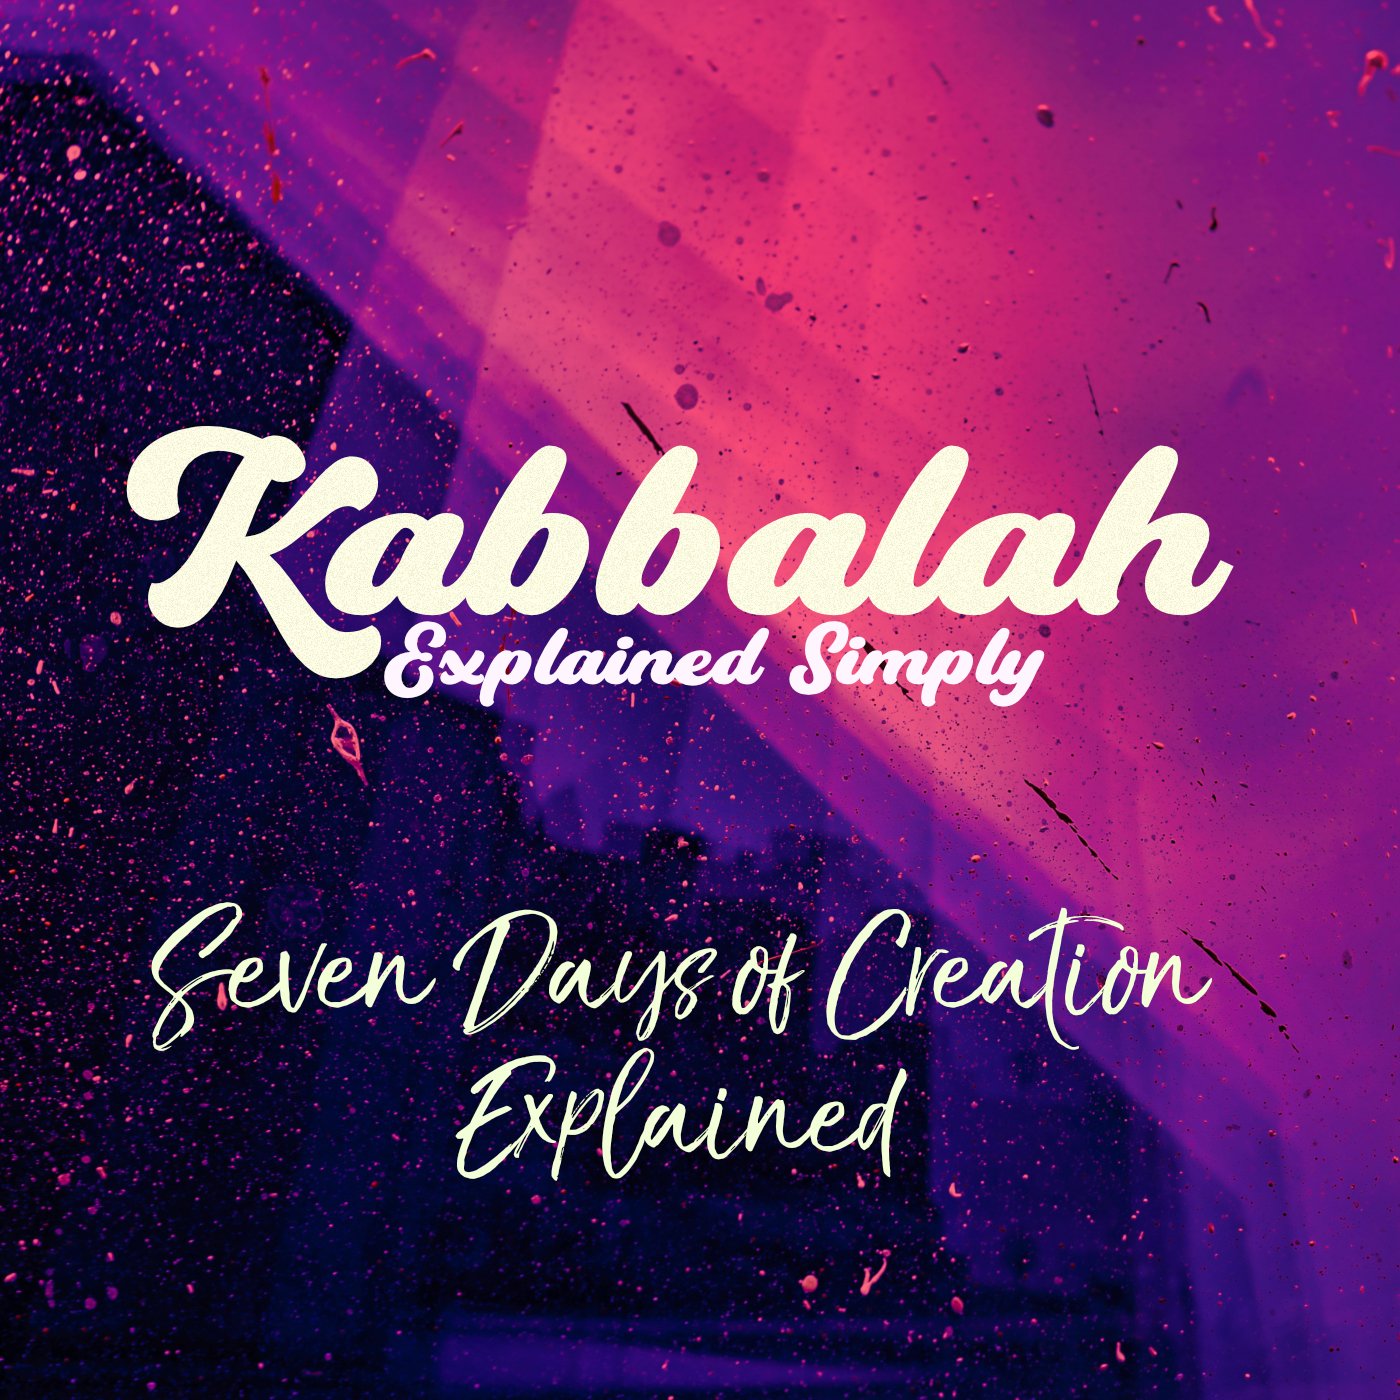 Kabbalah Explained Simply - 7 Days of Creation Explained